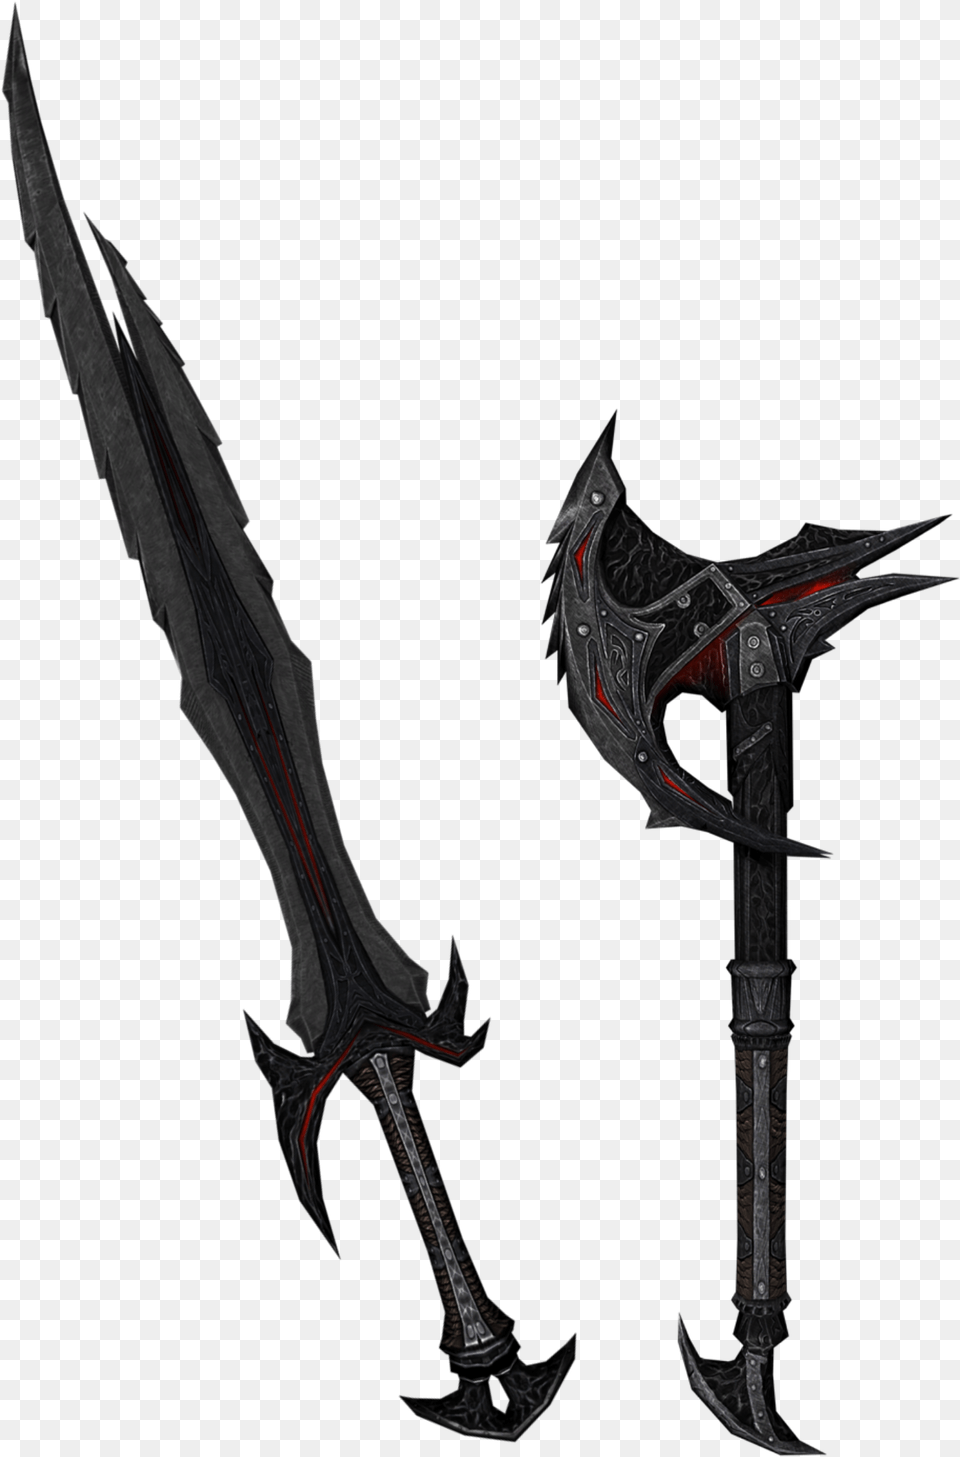 Battle Axe, Sword, Weapon, Blade, Dagger Png Image